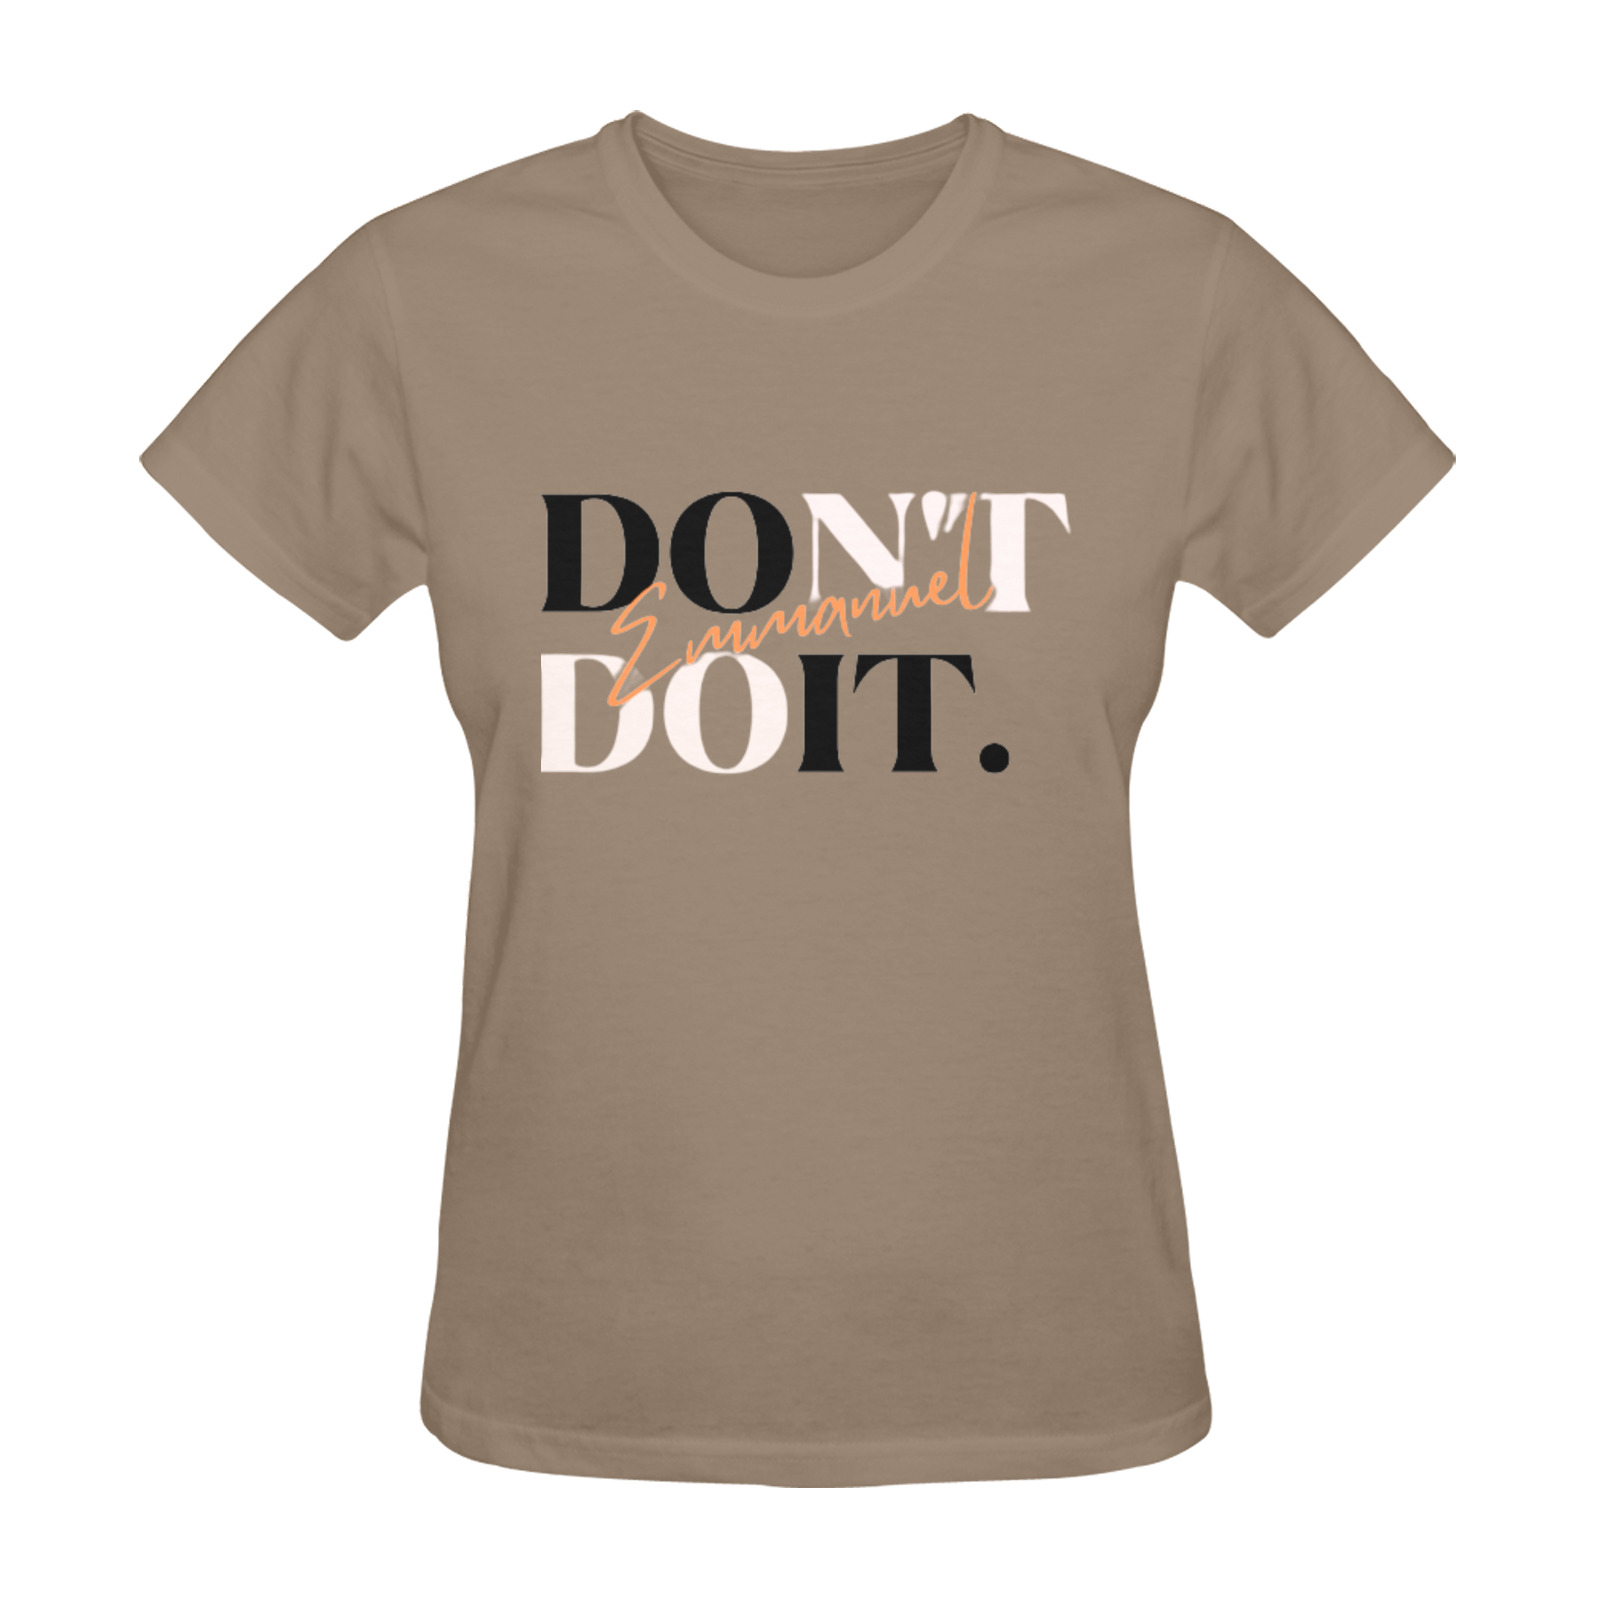 EMMANUEL DON'T DO IT! SUNNY WOMEN'S T-SHIRT BROWN Sunny Women's T-shirt (Model T05)